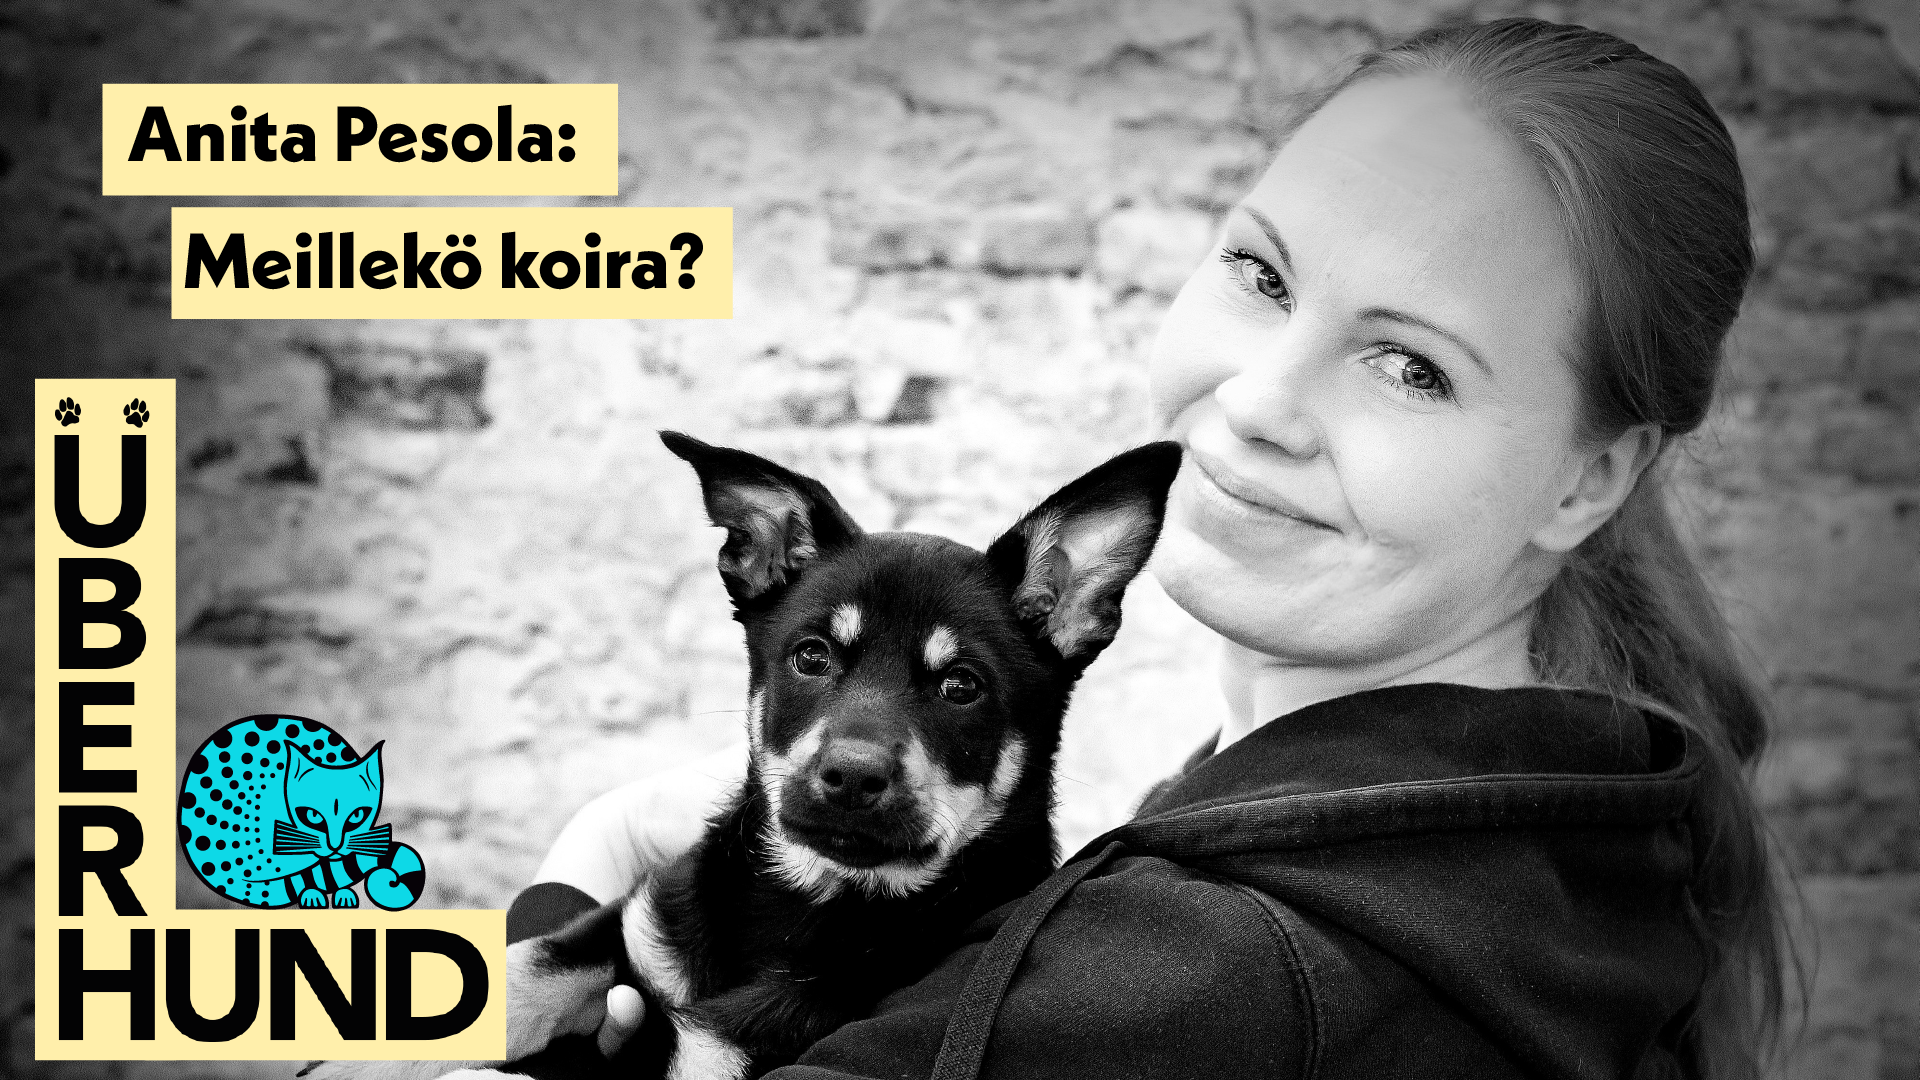 Anita Pesola: Meillekö koira?